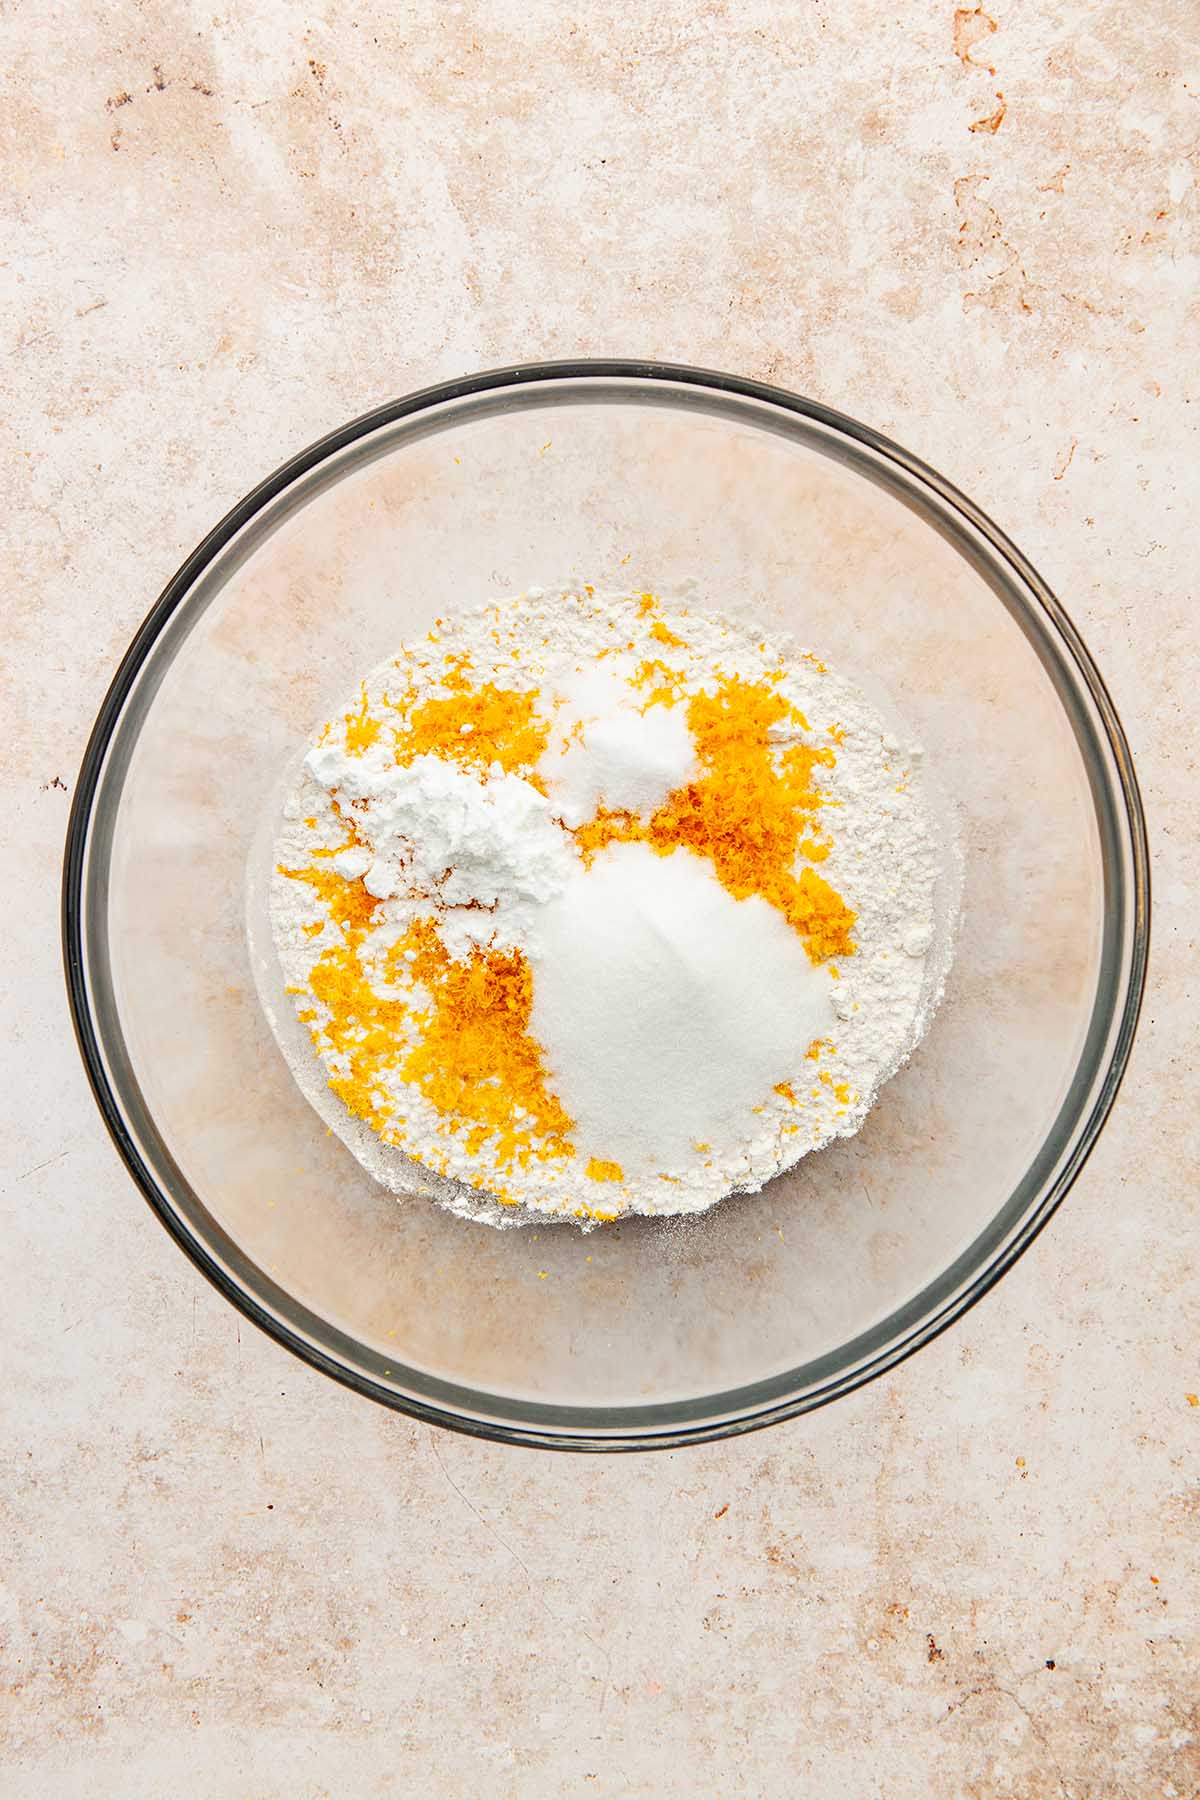 A bowl of flour with sugar, orange zest, baking powder, and salt.